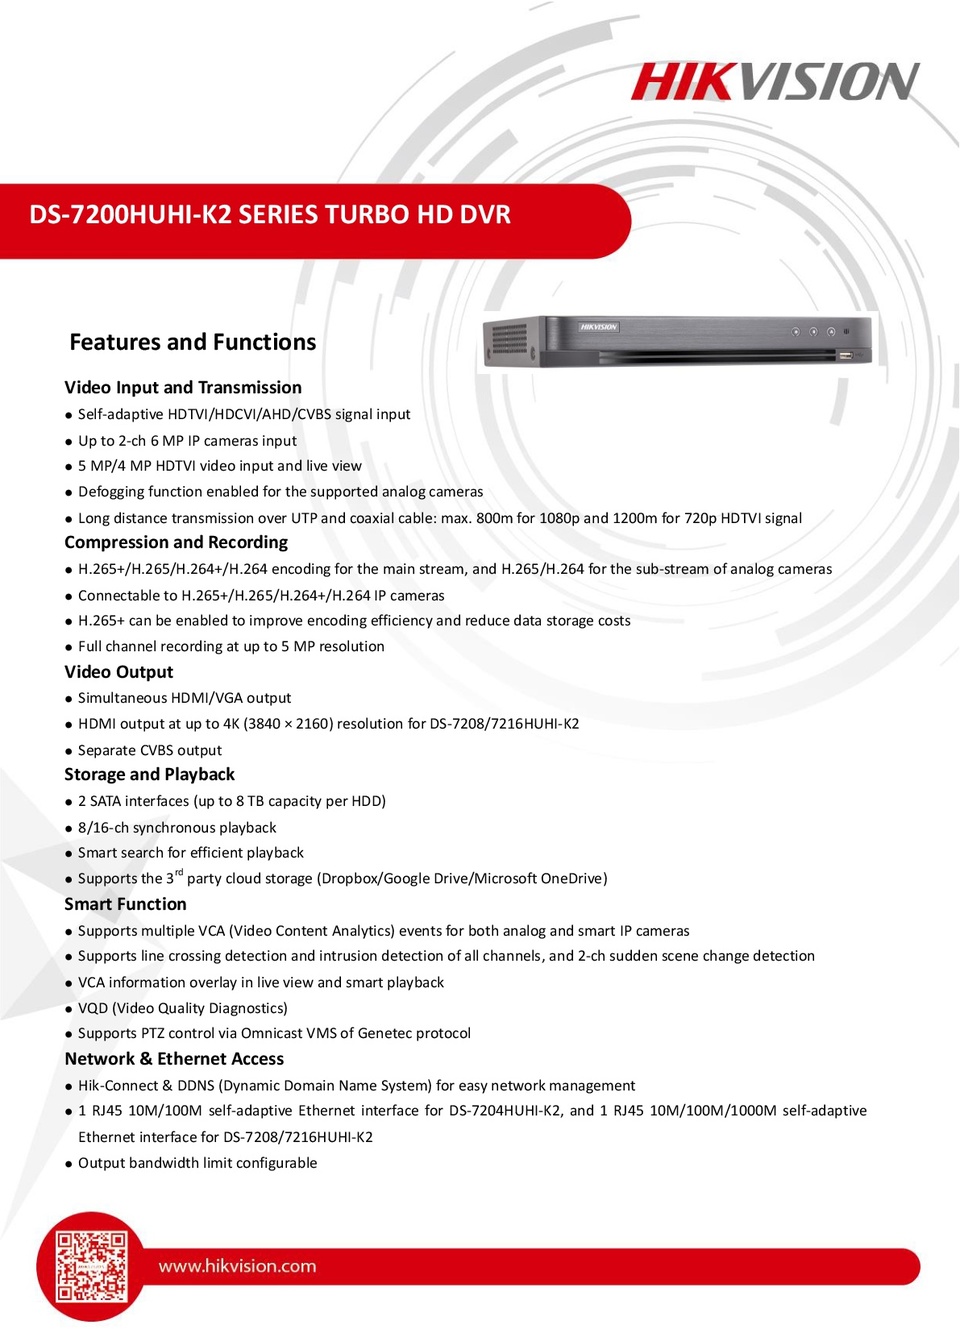 hikvision ds-7216huhi-k2 16ch hd-tvi dvr - includes 3tb hard drive